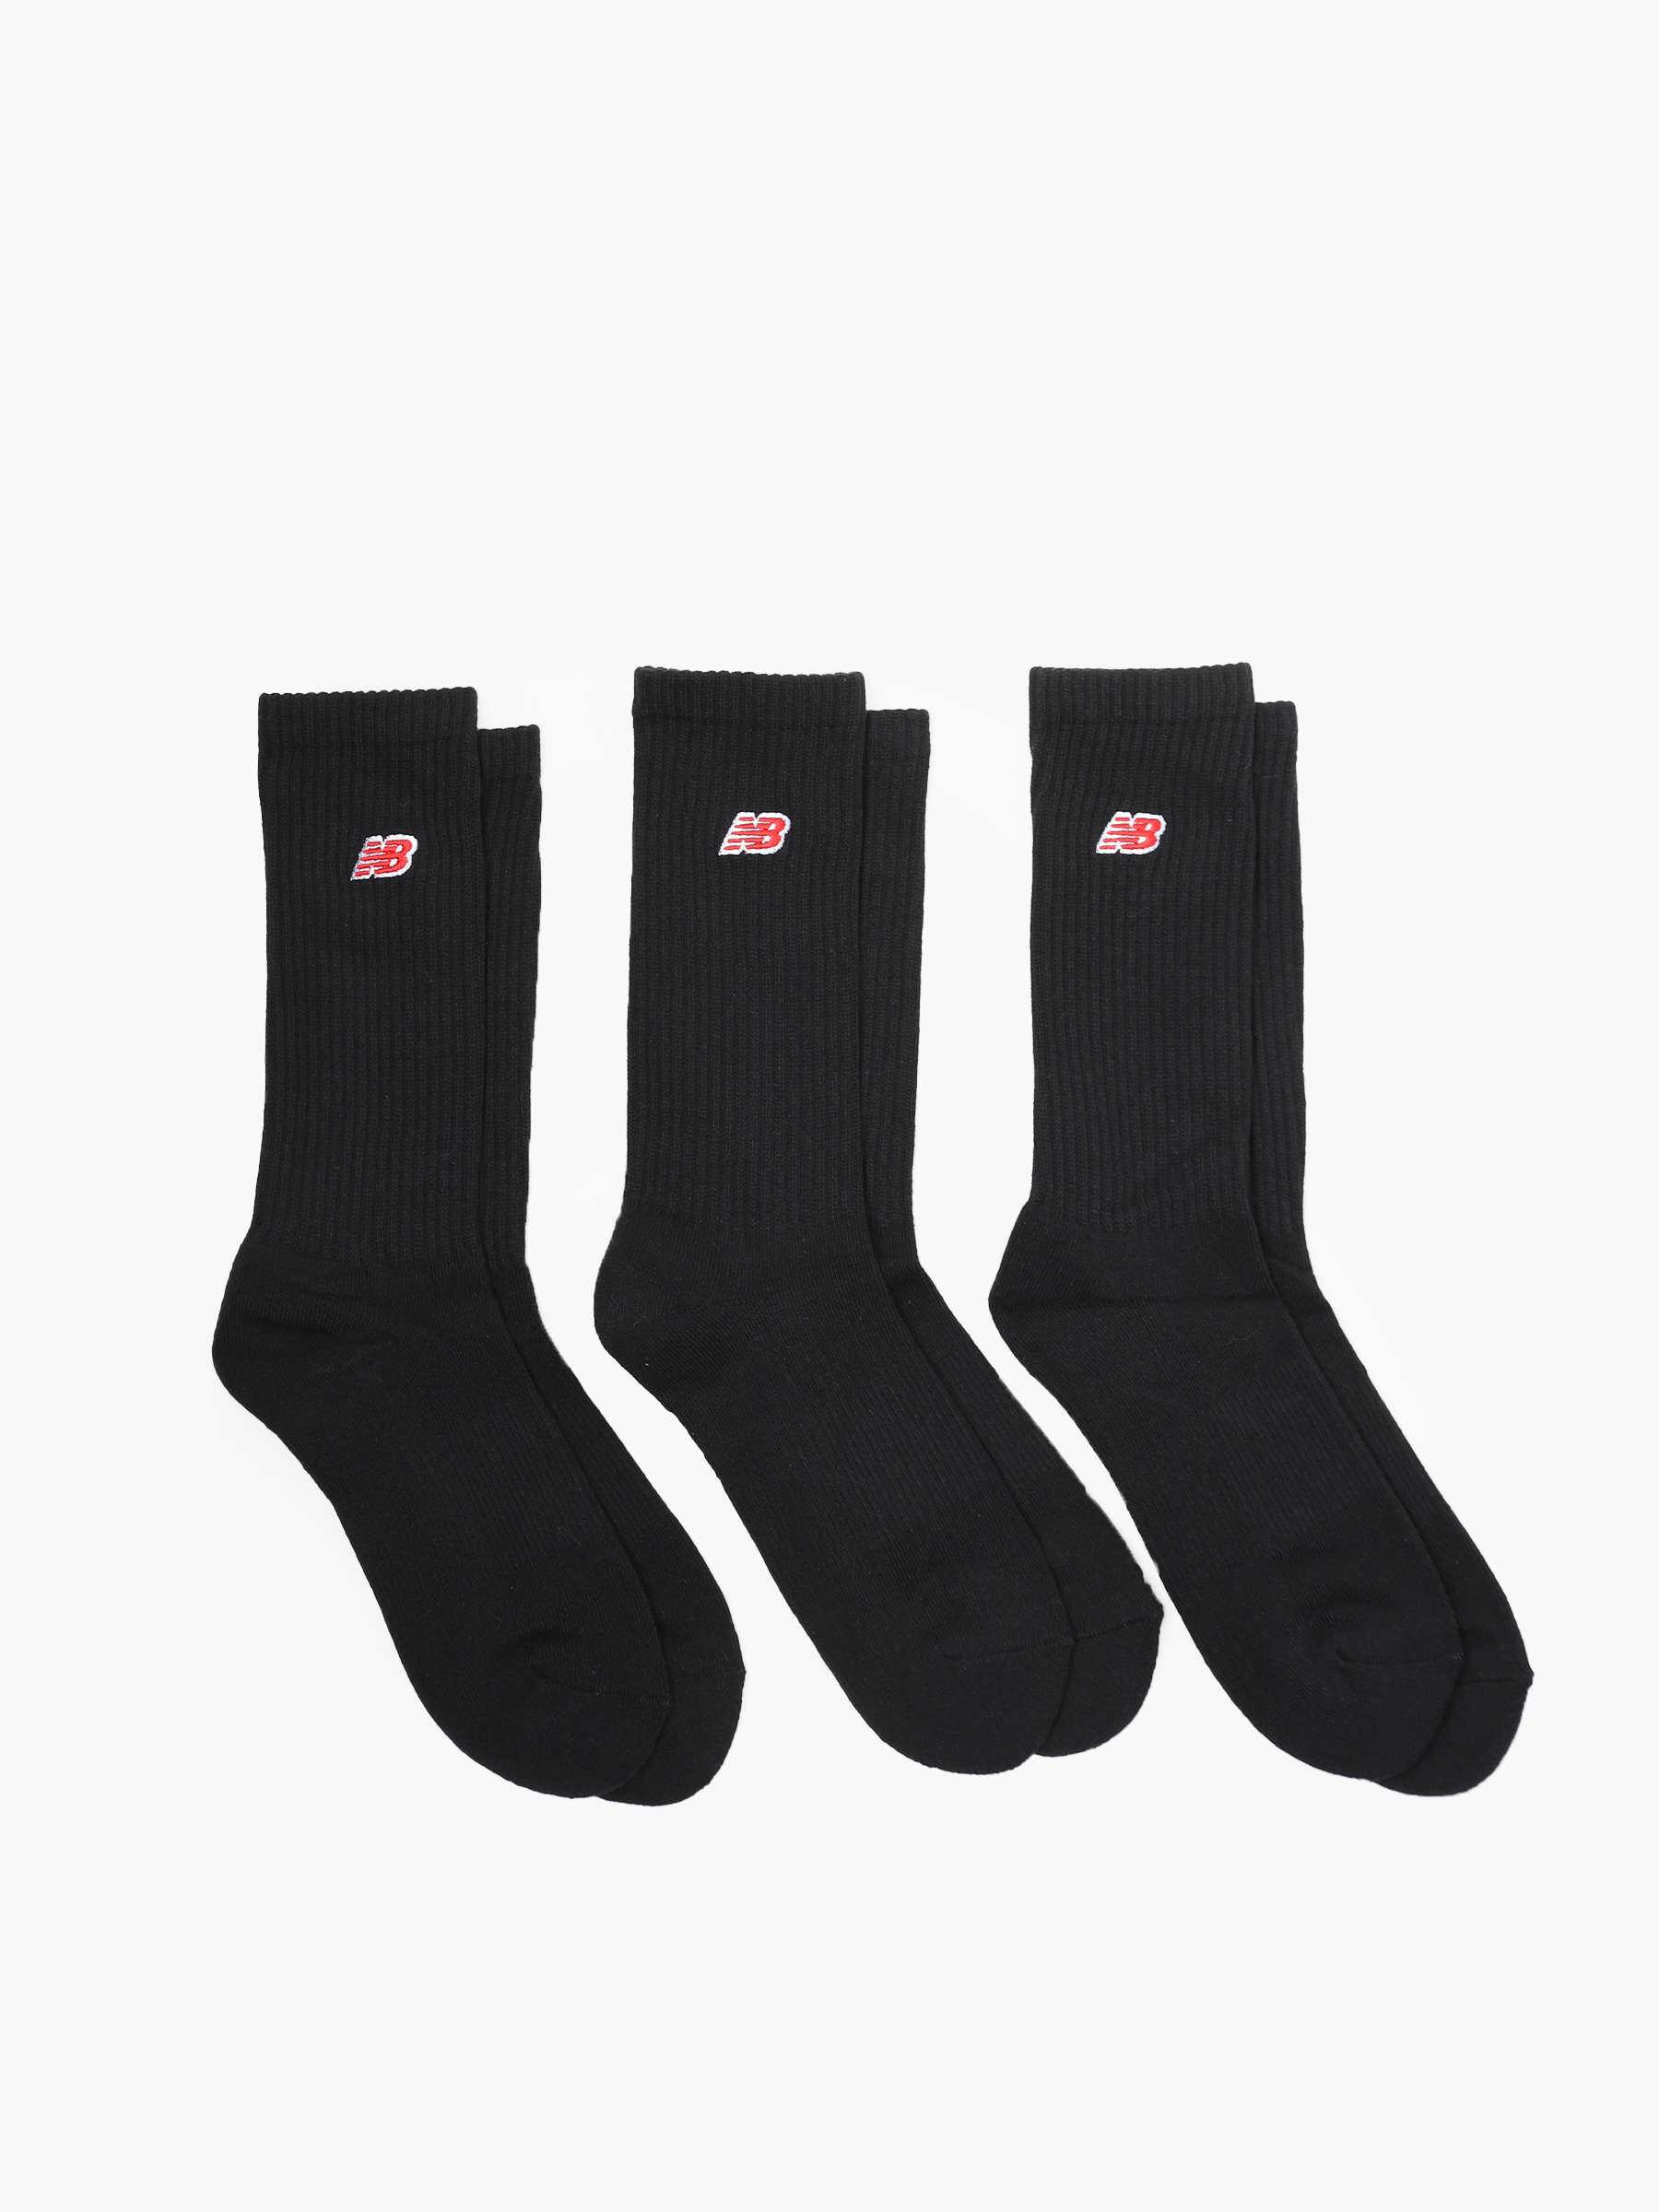 NB Patch Logo Crew 3 Pairs Socks Black LAS33763-BK